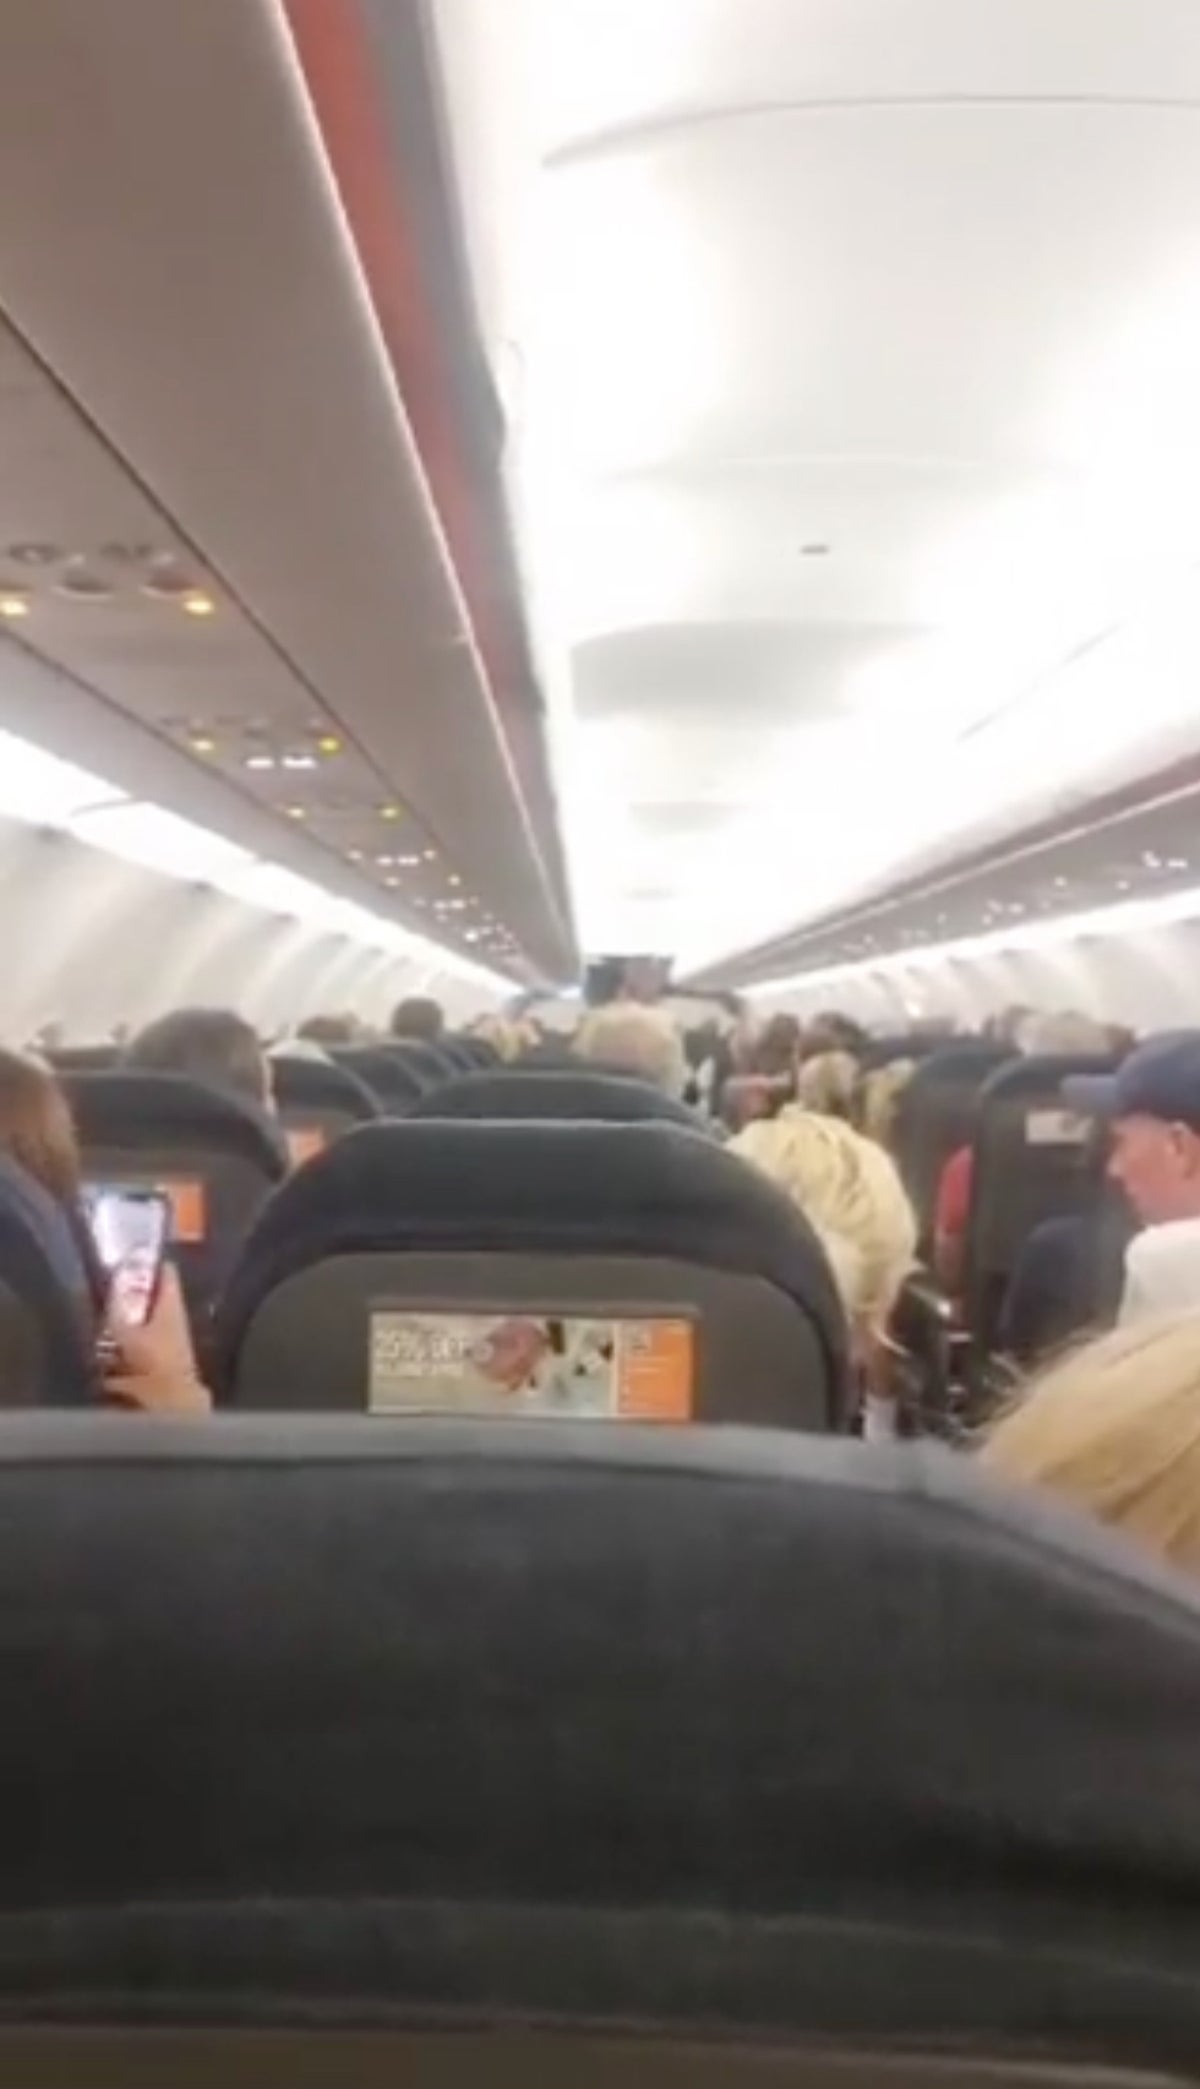 EasyJet bumps 19 passengers off flight because plane is ‘too heavy’